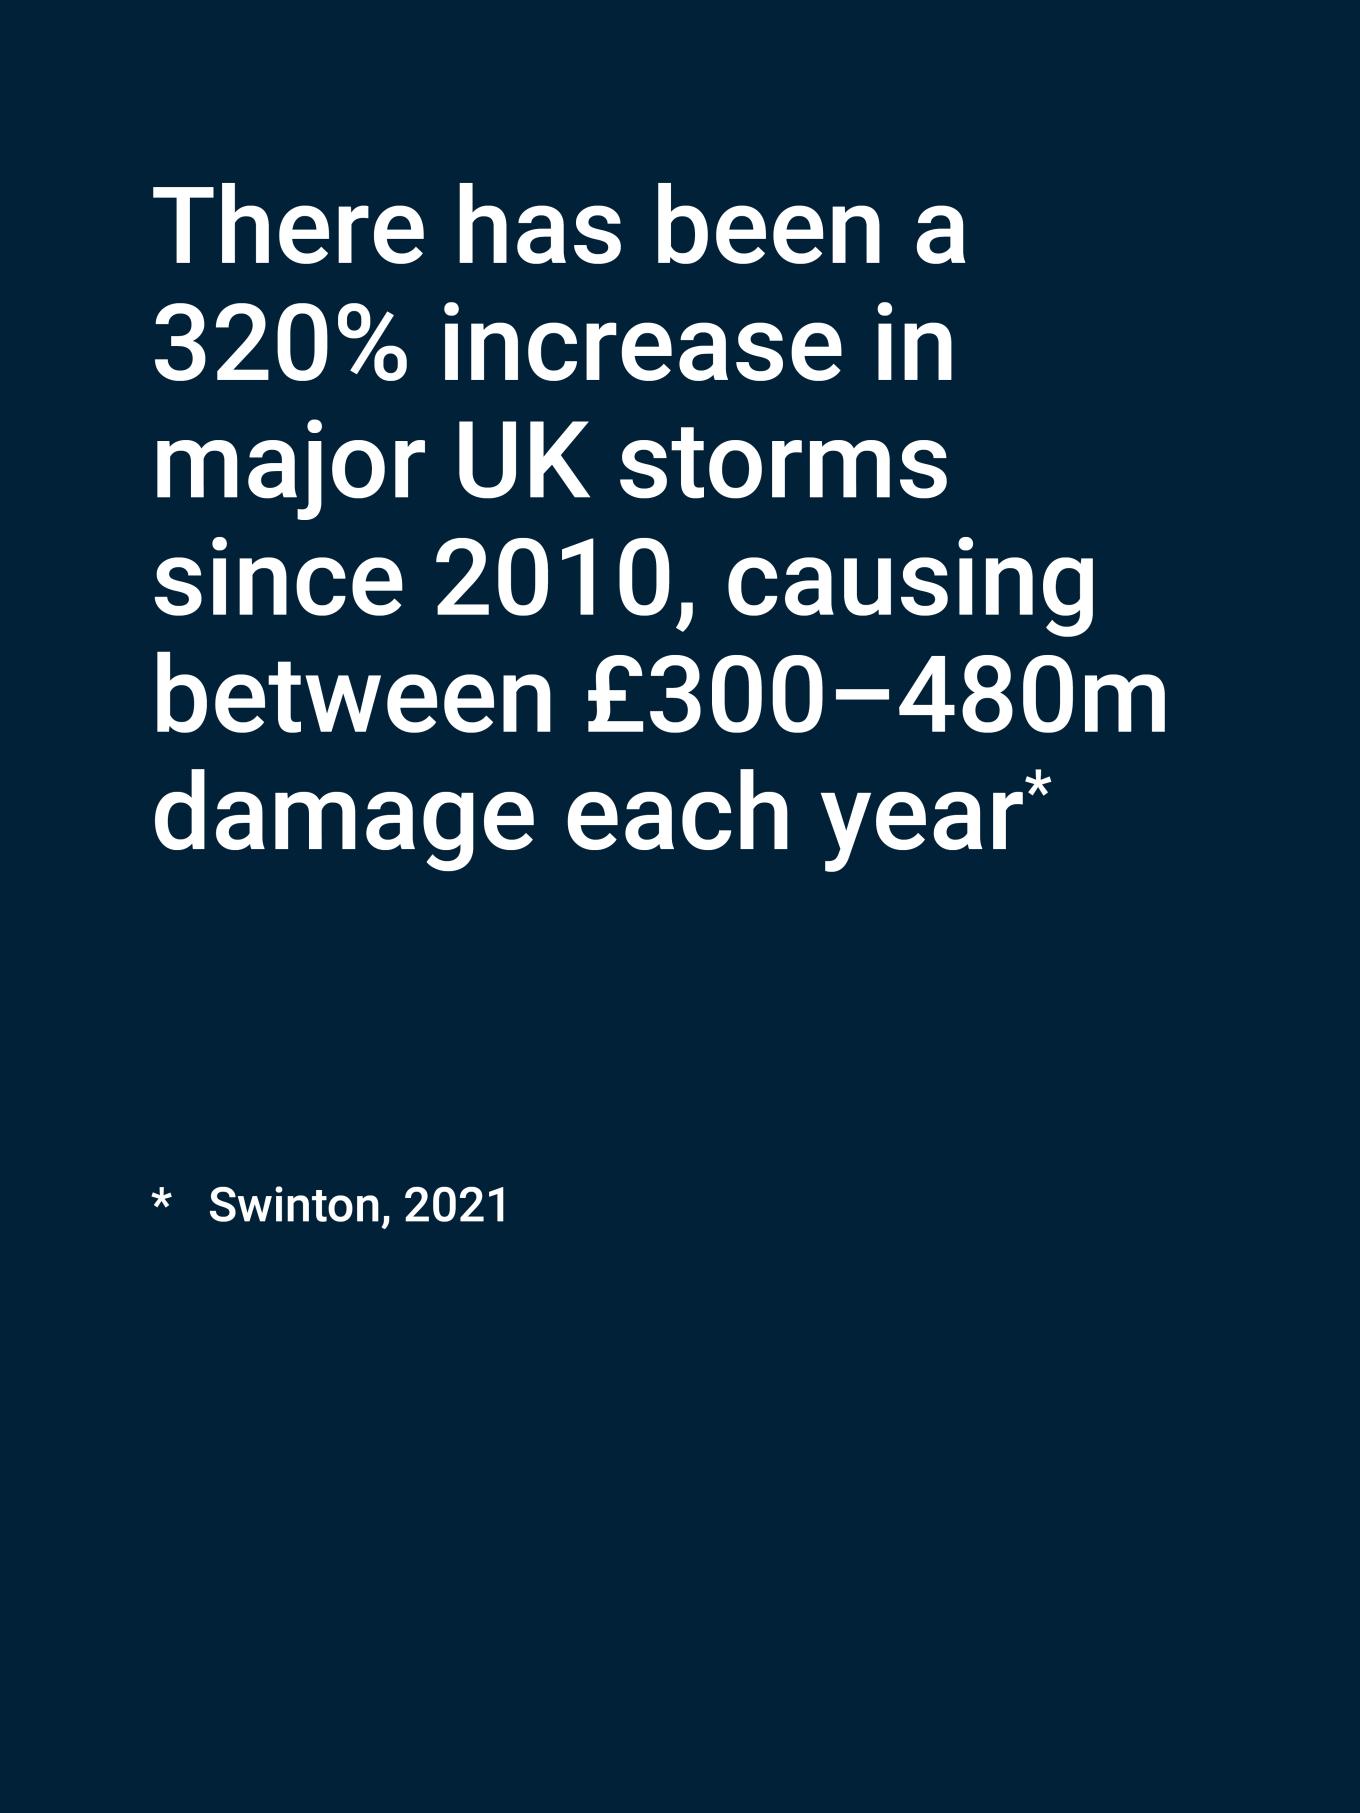 Increase in UK storms